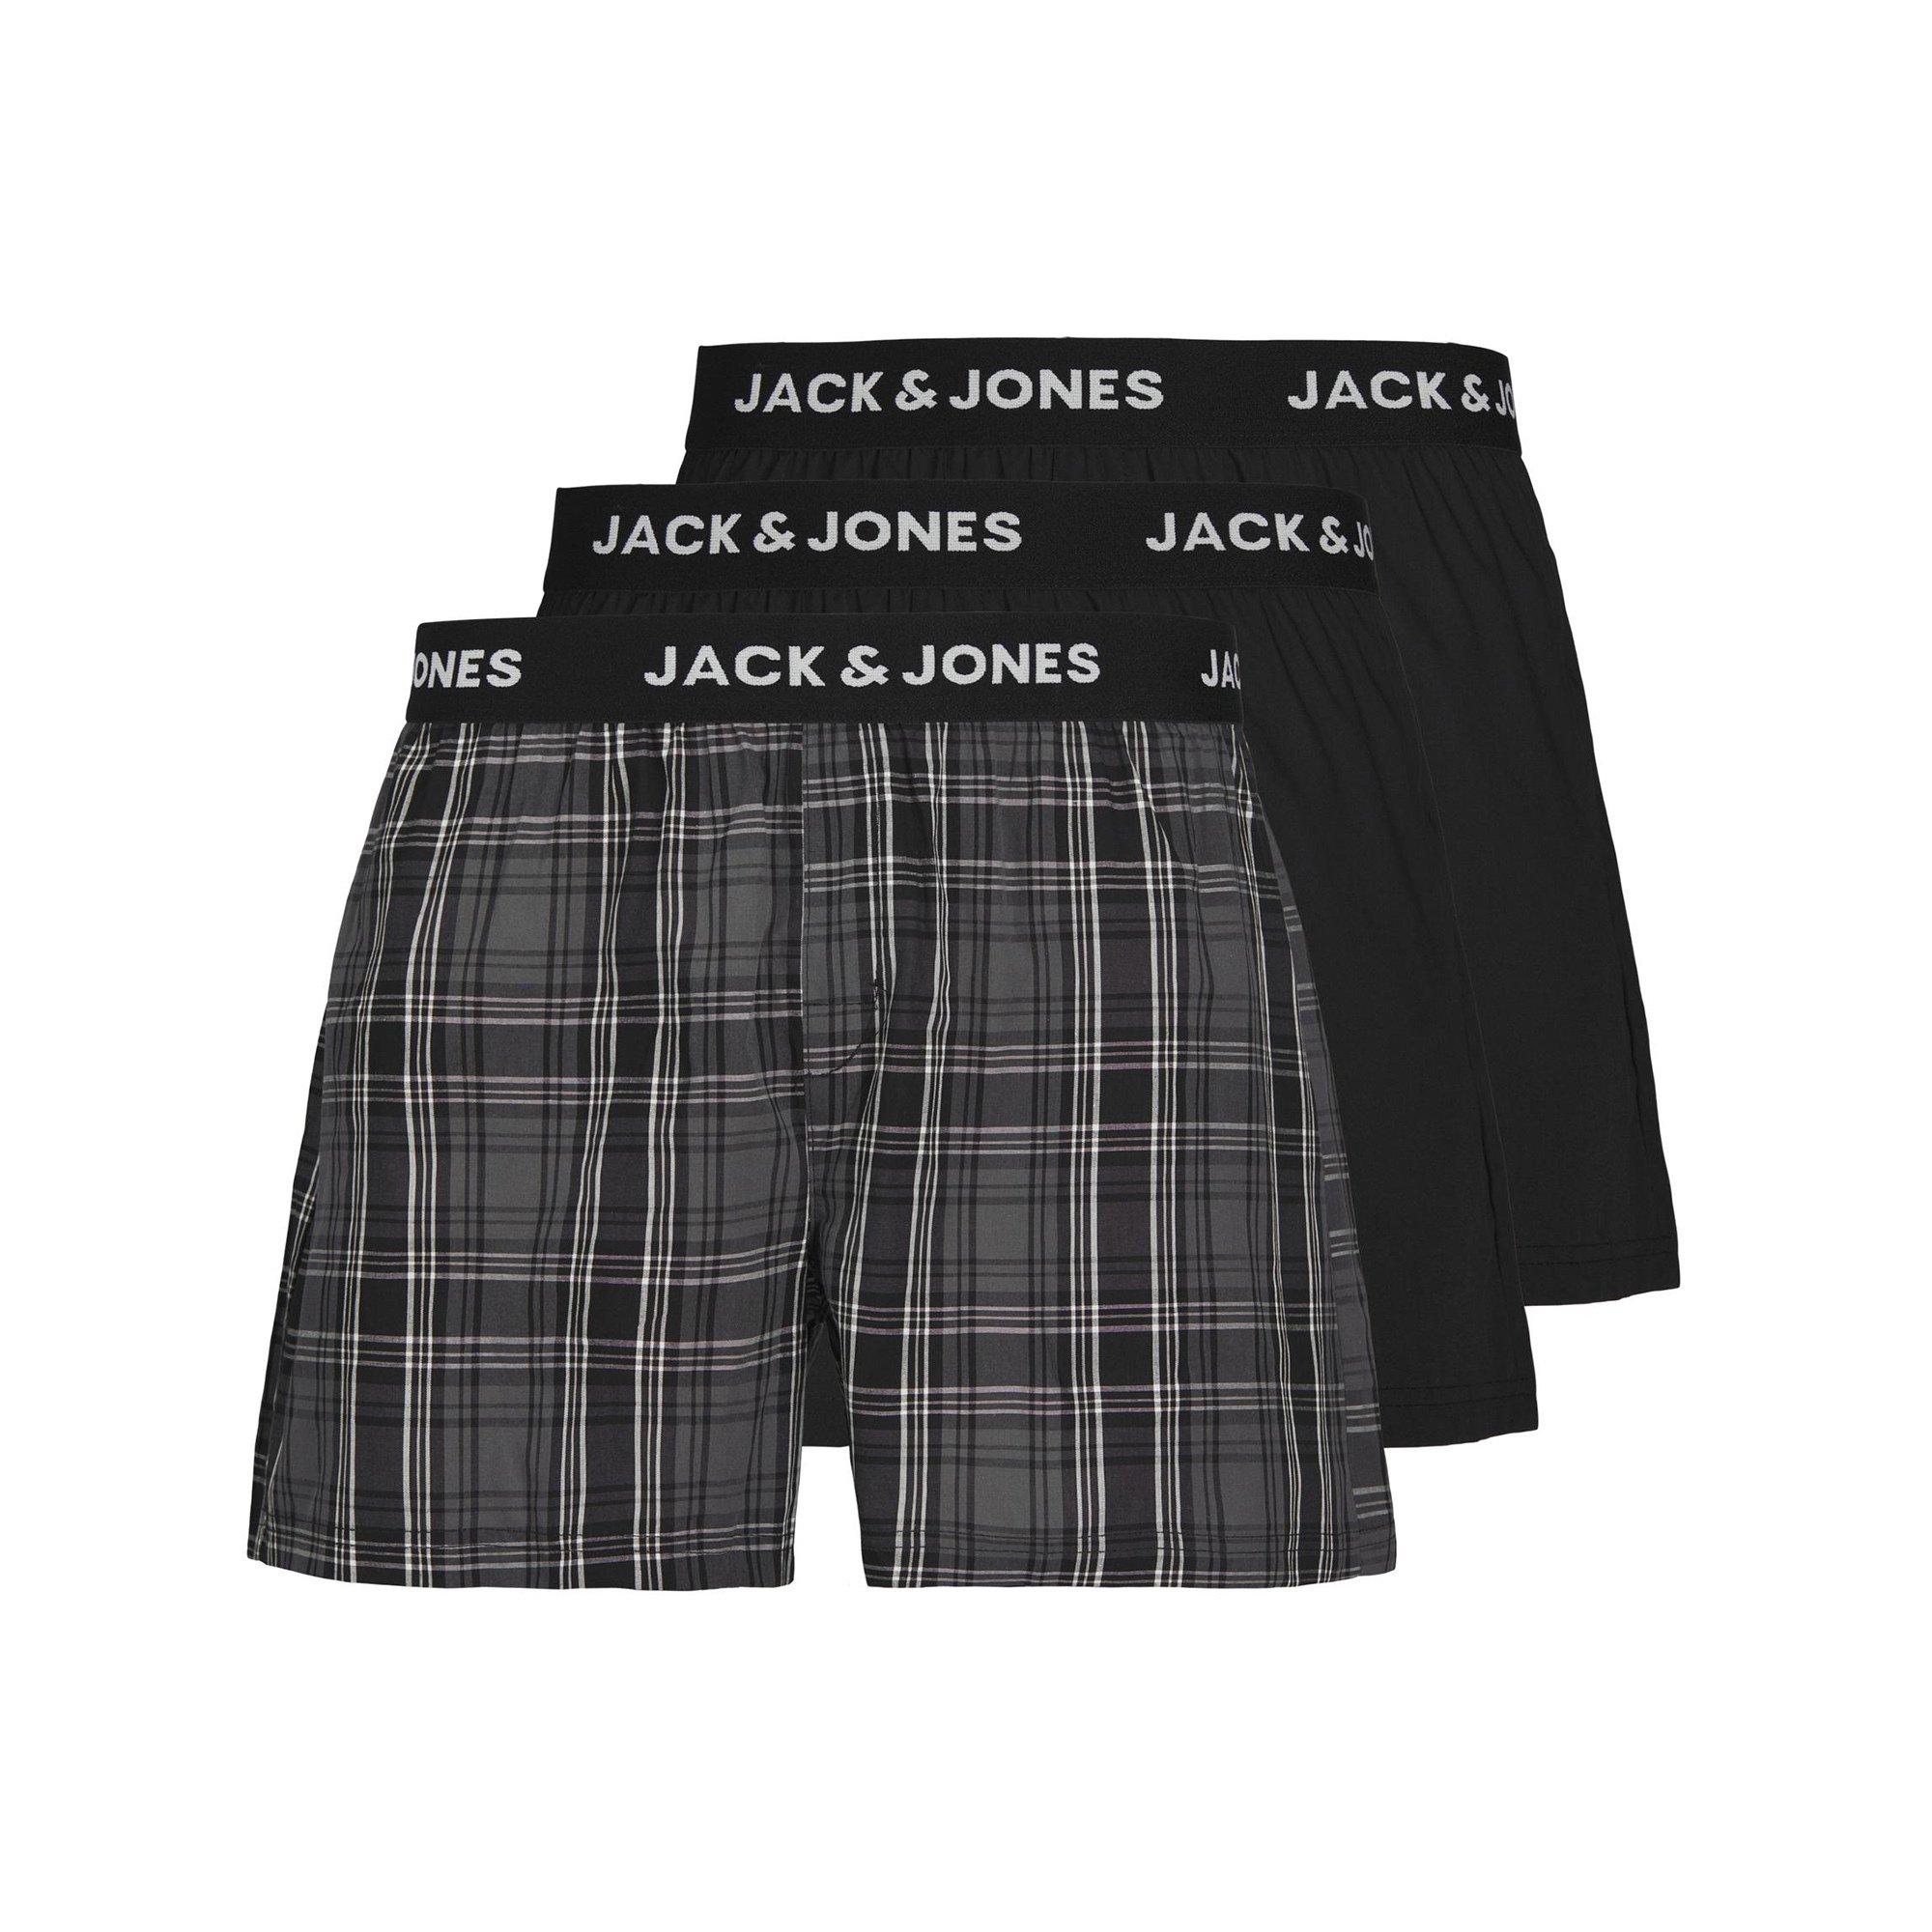 JACK & JONES JACJAMES WOVEN BOXERS 3P Boxer, senza apertura, confezione trippla 